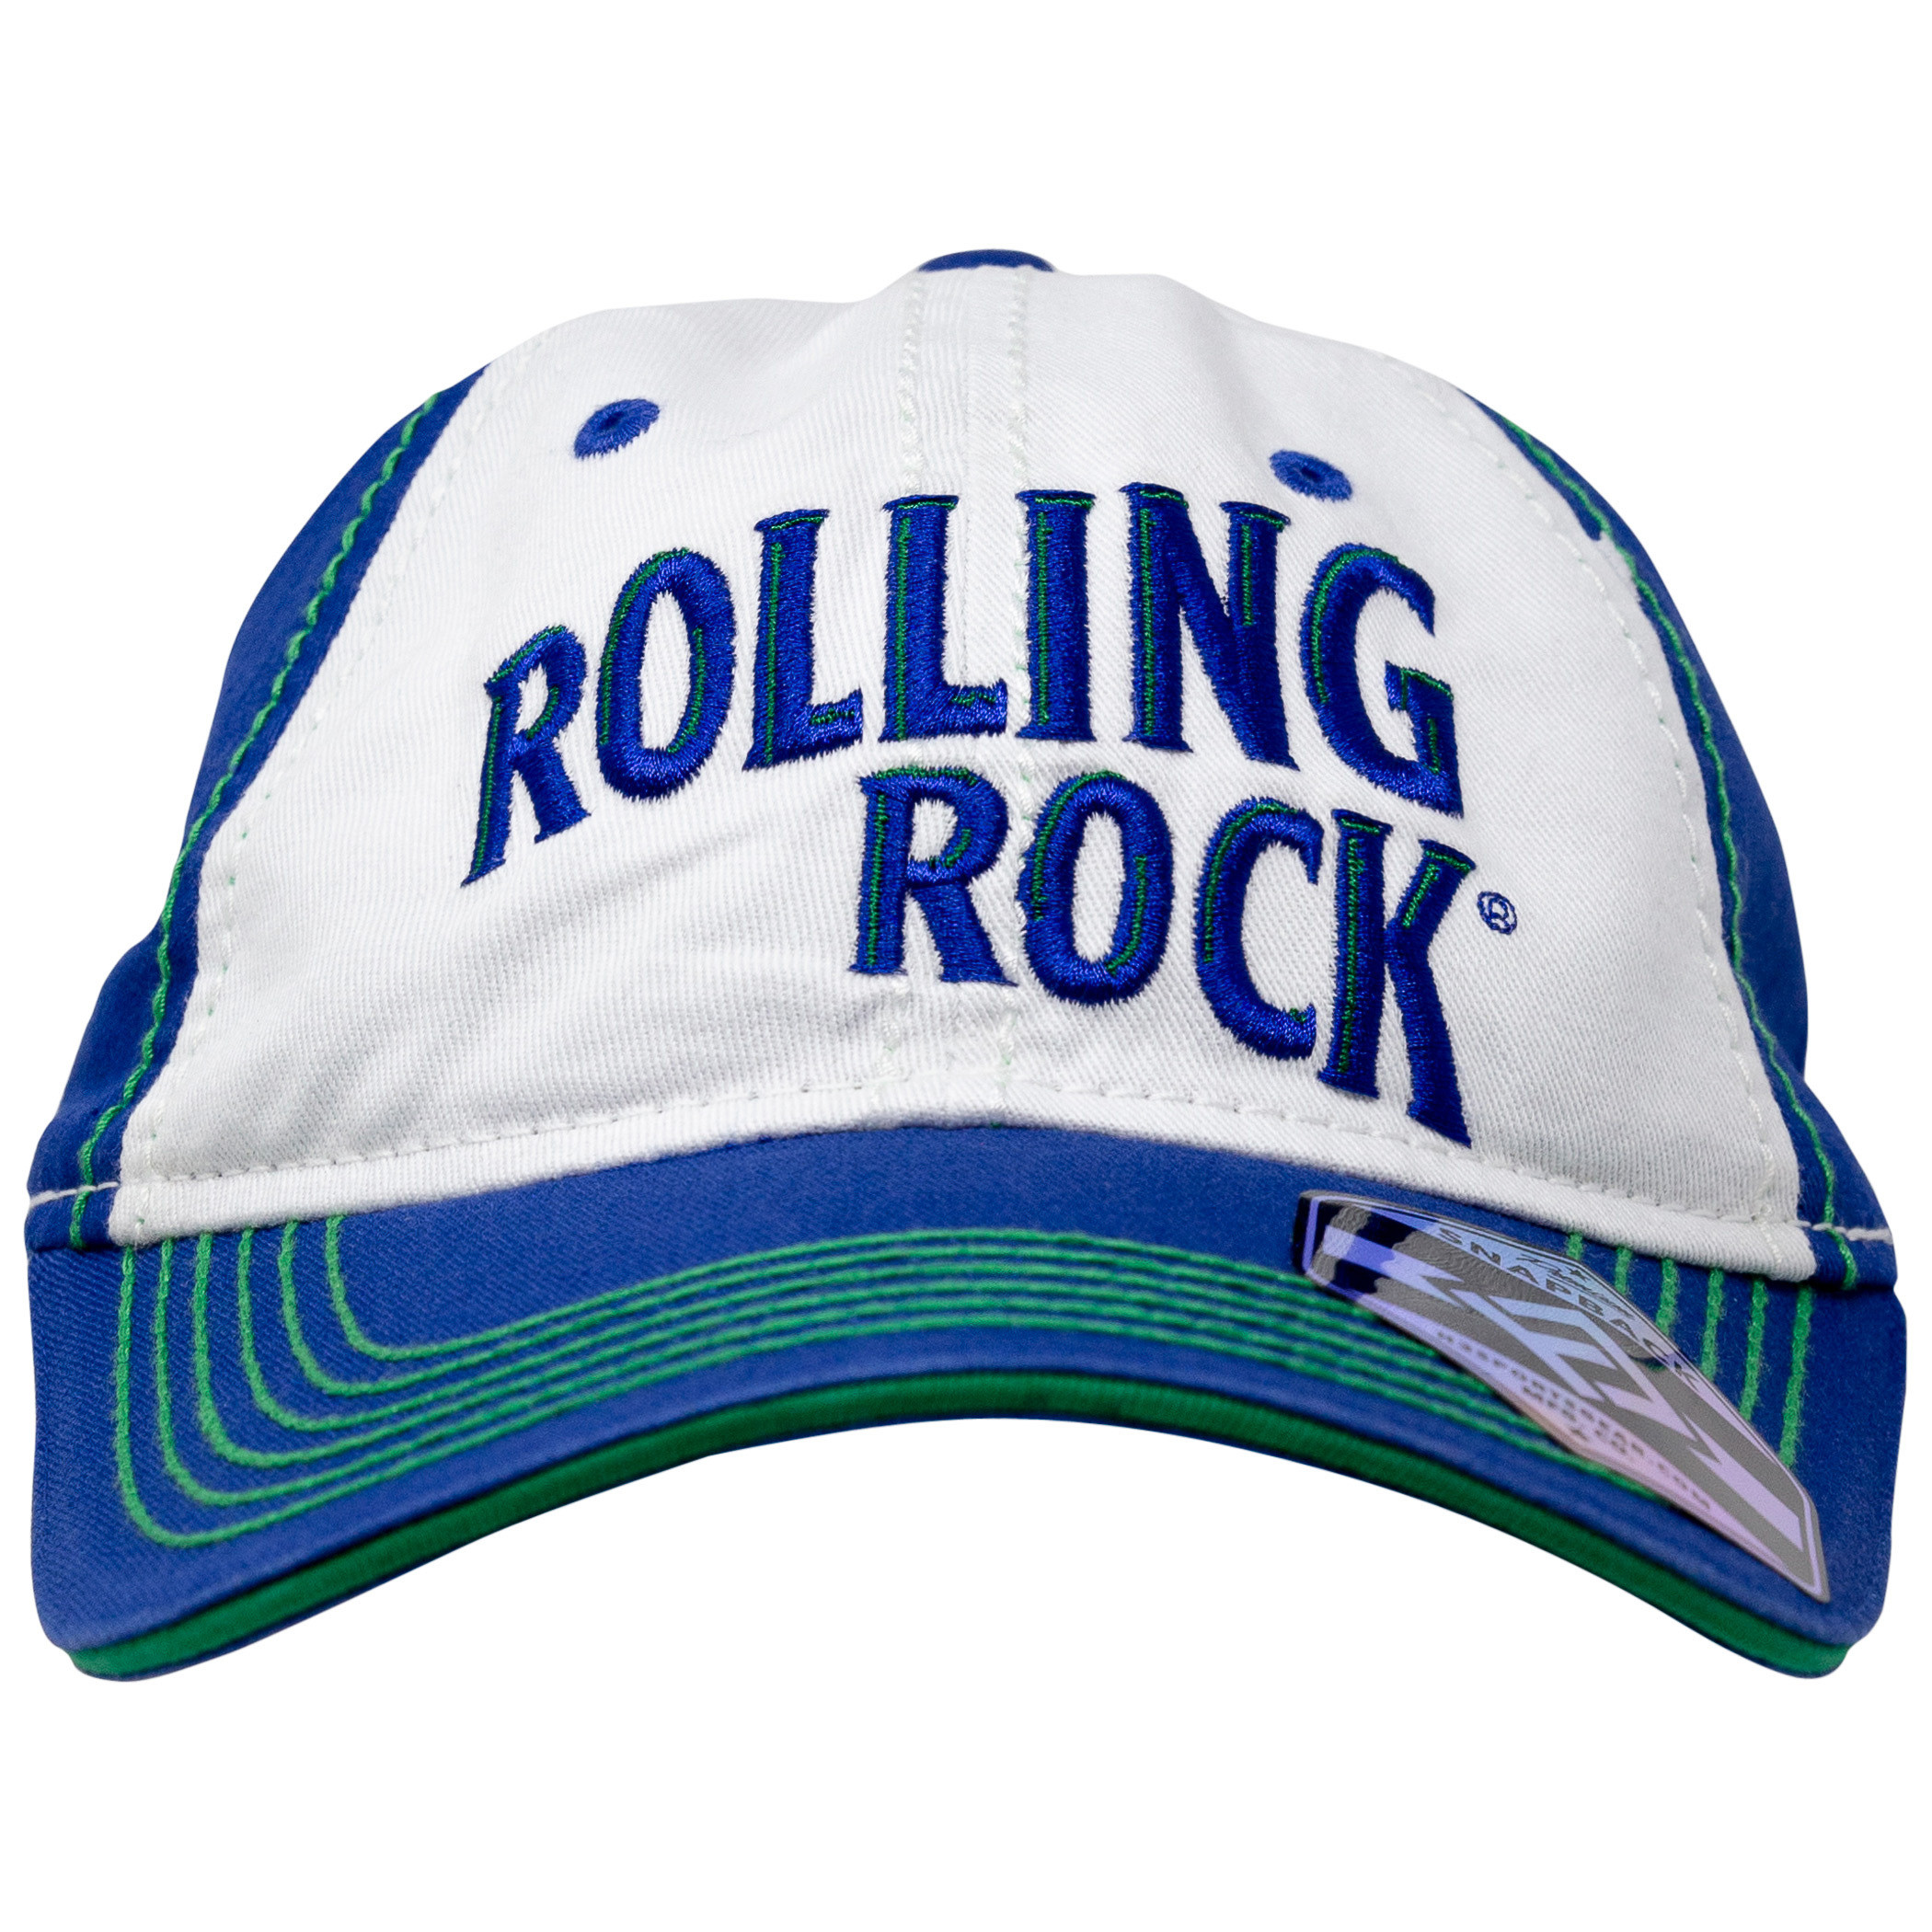 Rolling Rock Beer Adjustable Snapback Hat